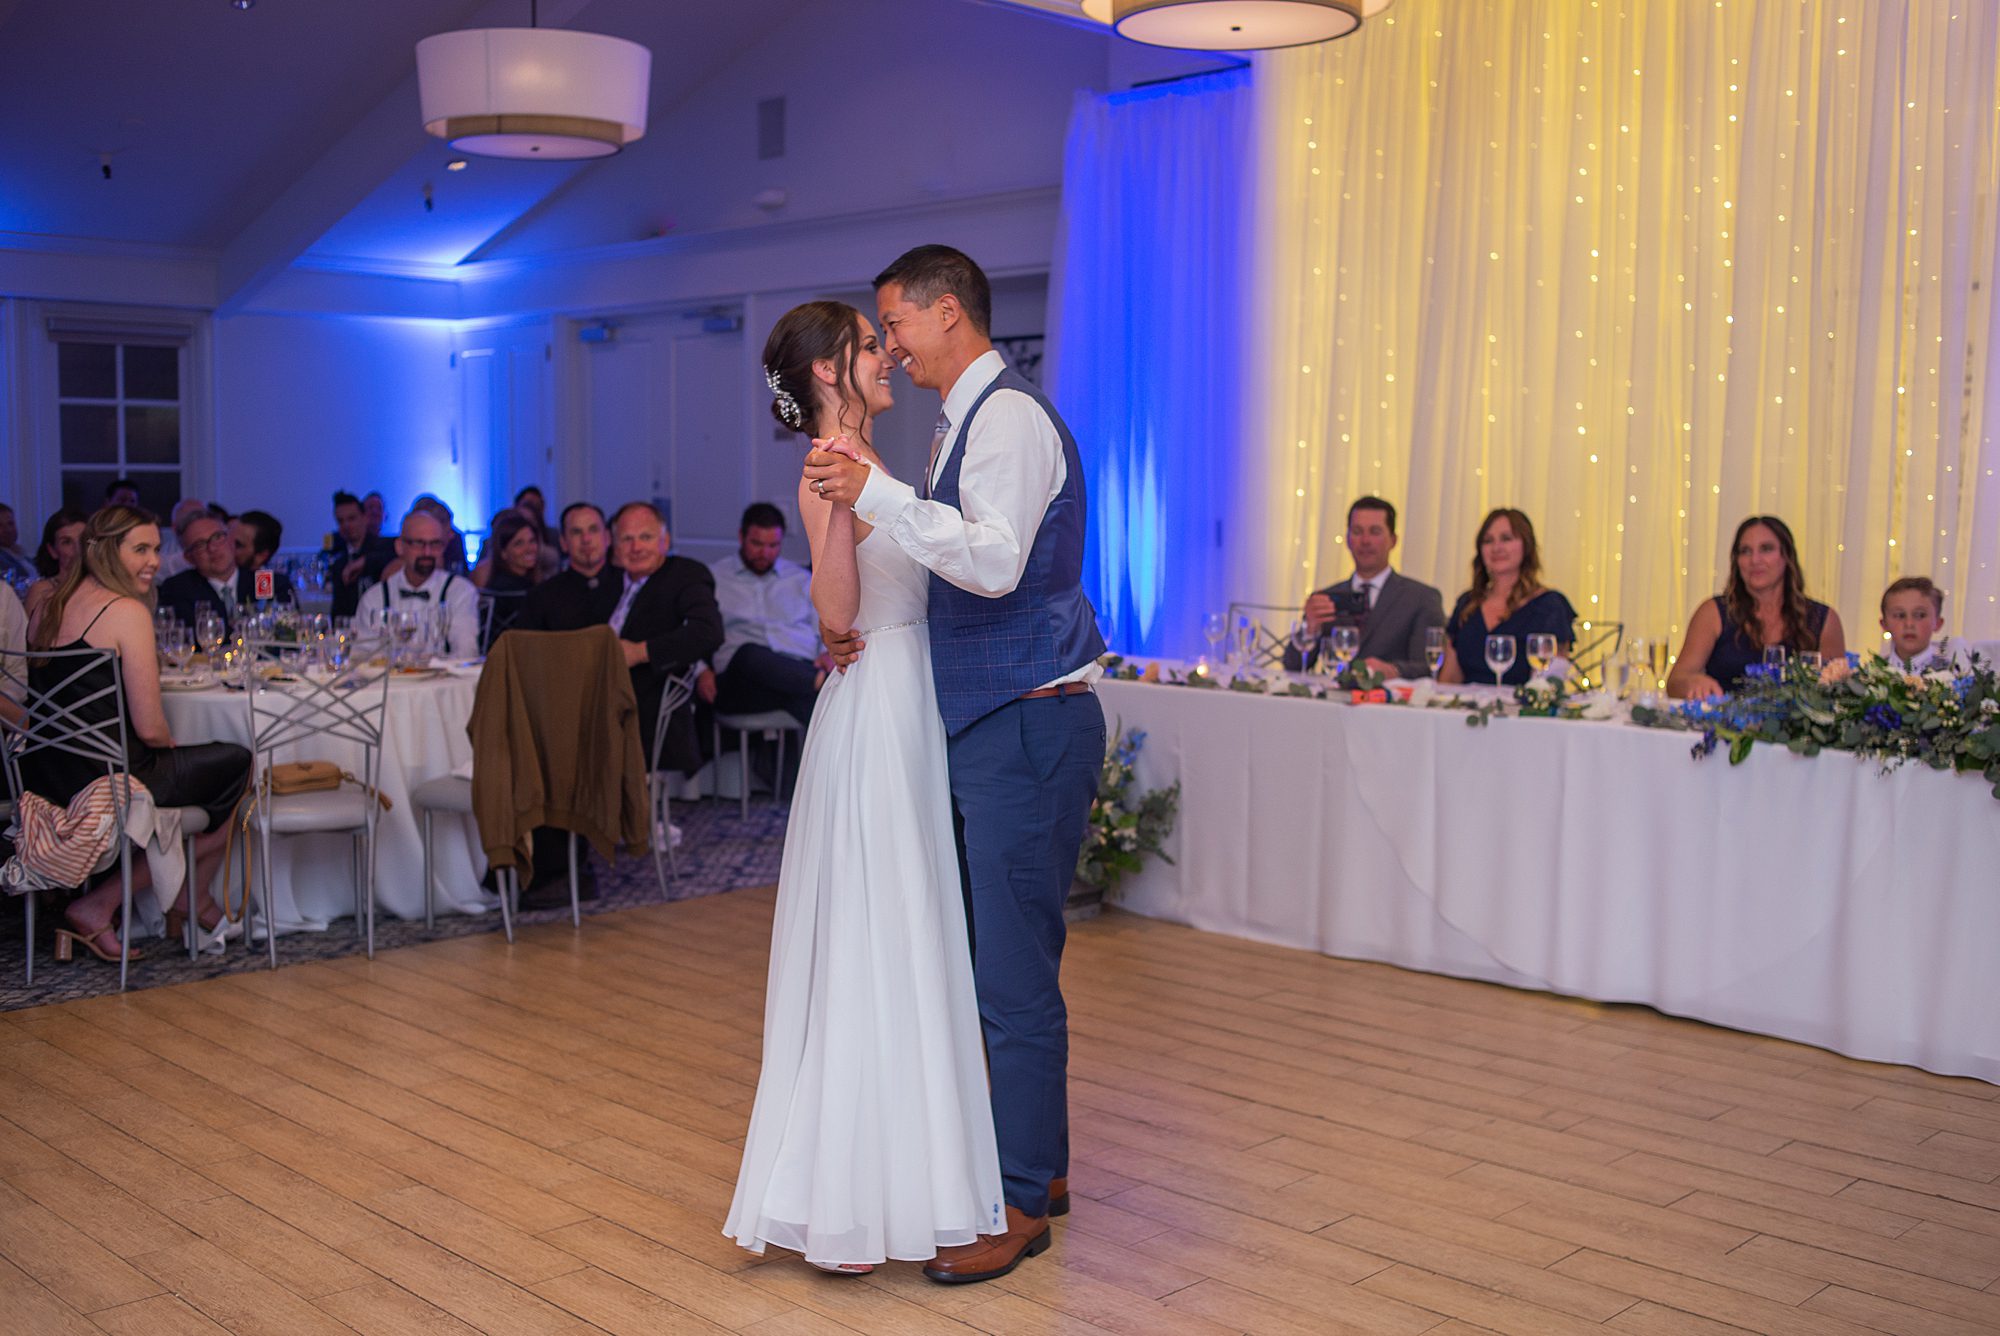 newlyweds share first dance